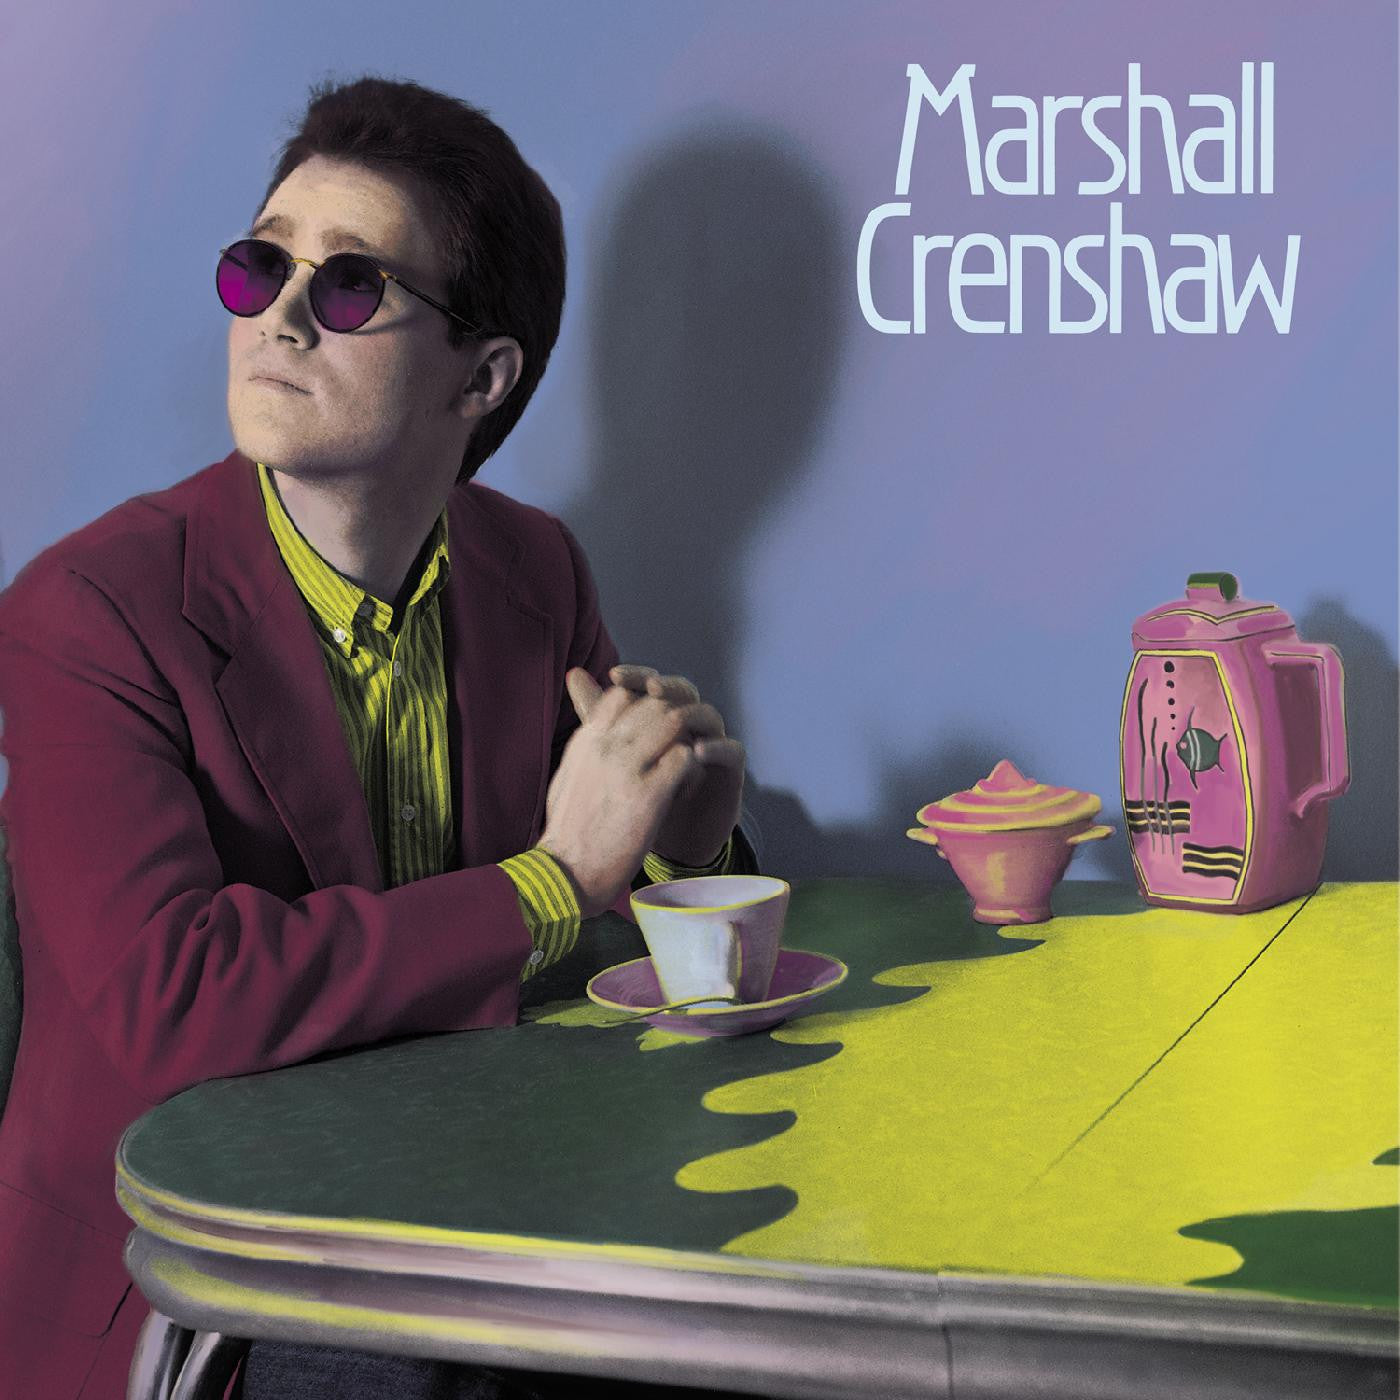 MARSHALL CRENSHAW 'MARSHALL CRENSHAW' CD (40th Anniversary, Deluxe Edition)